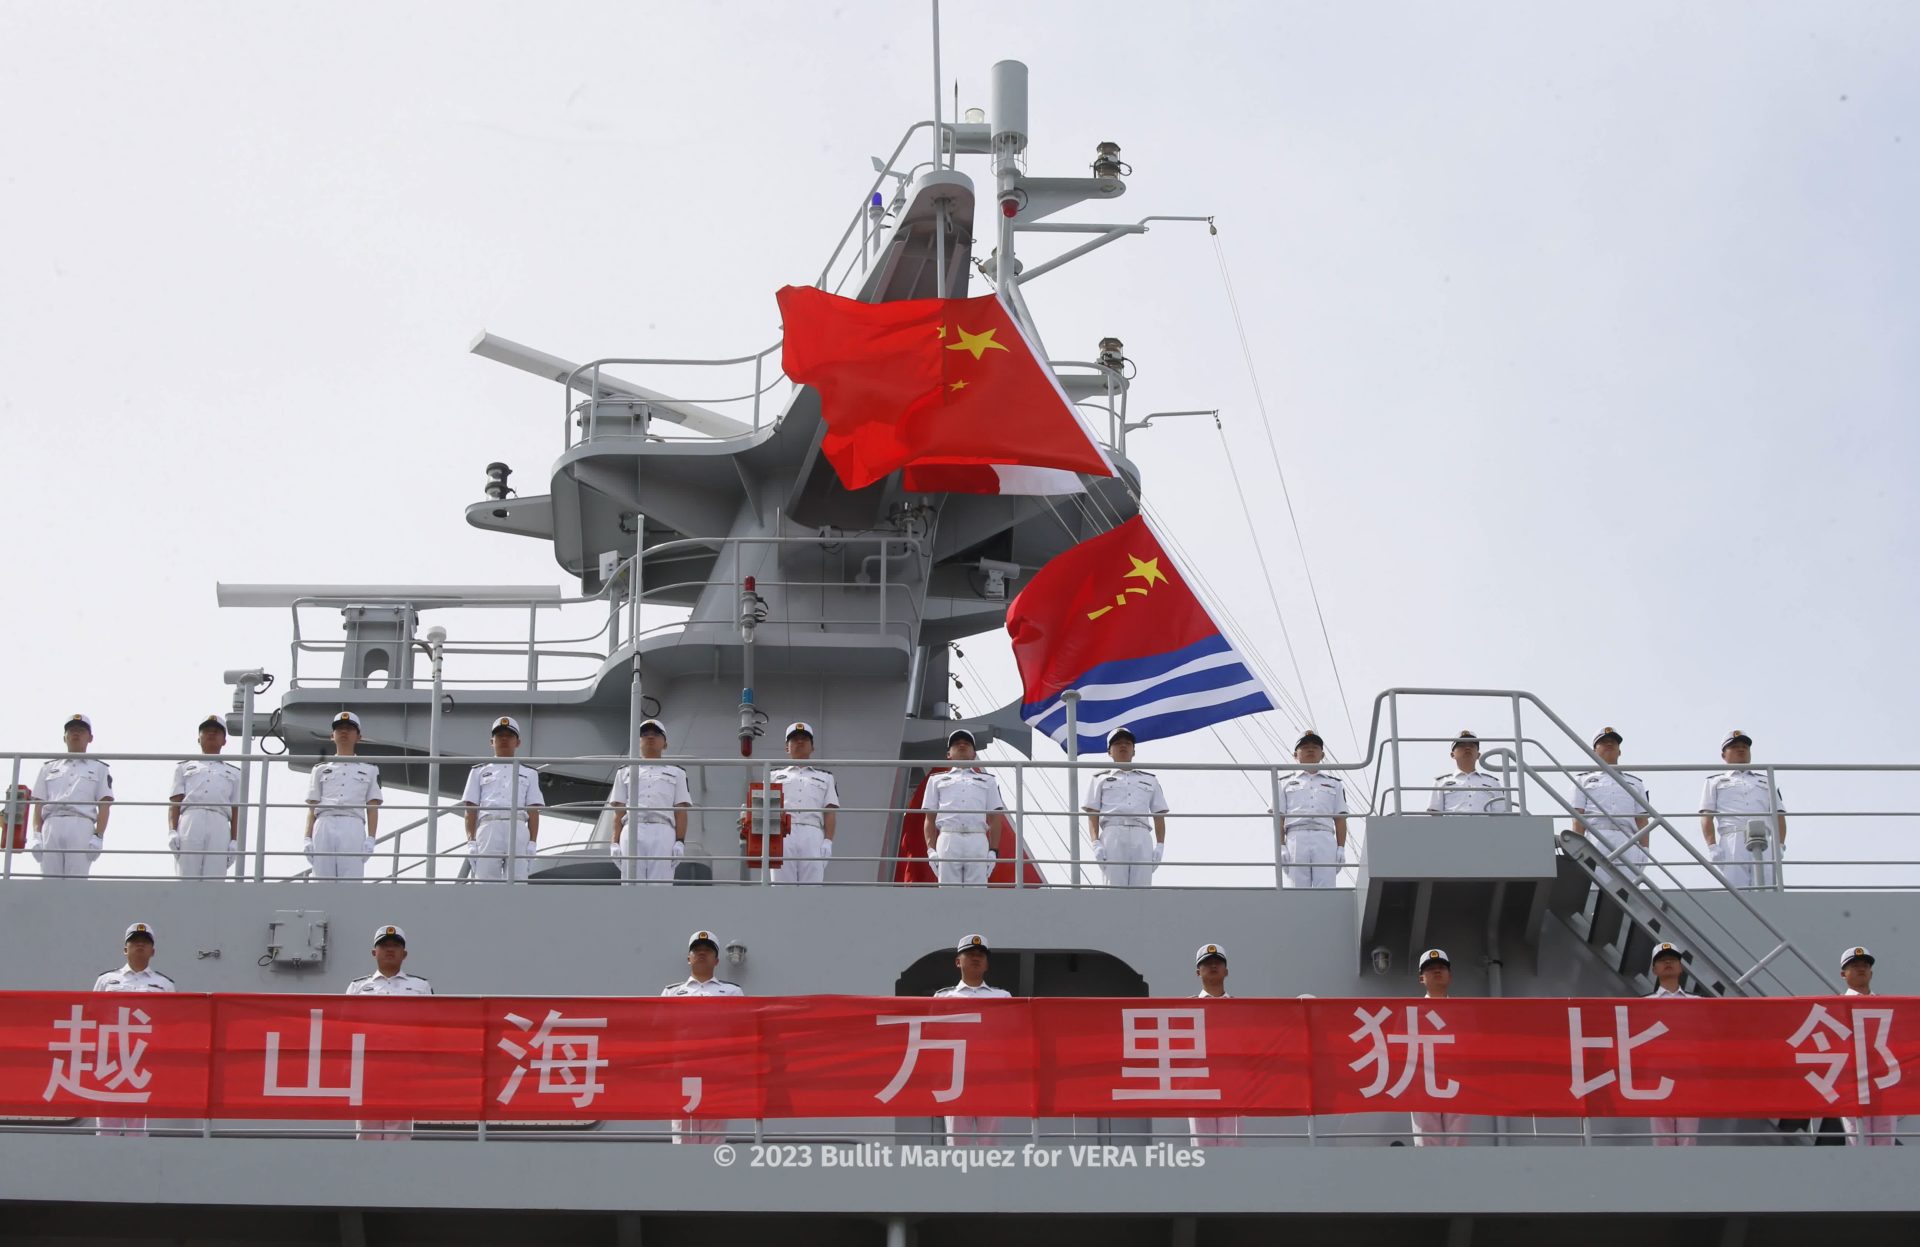 061423 Qi Jiguang Chinese Naval Training Ship 4/10 Photo by Bullit Marquez